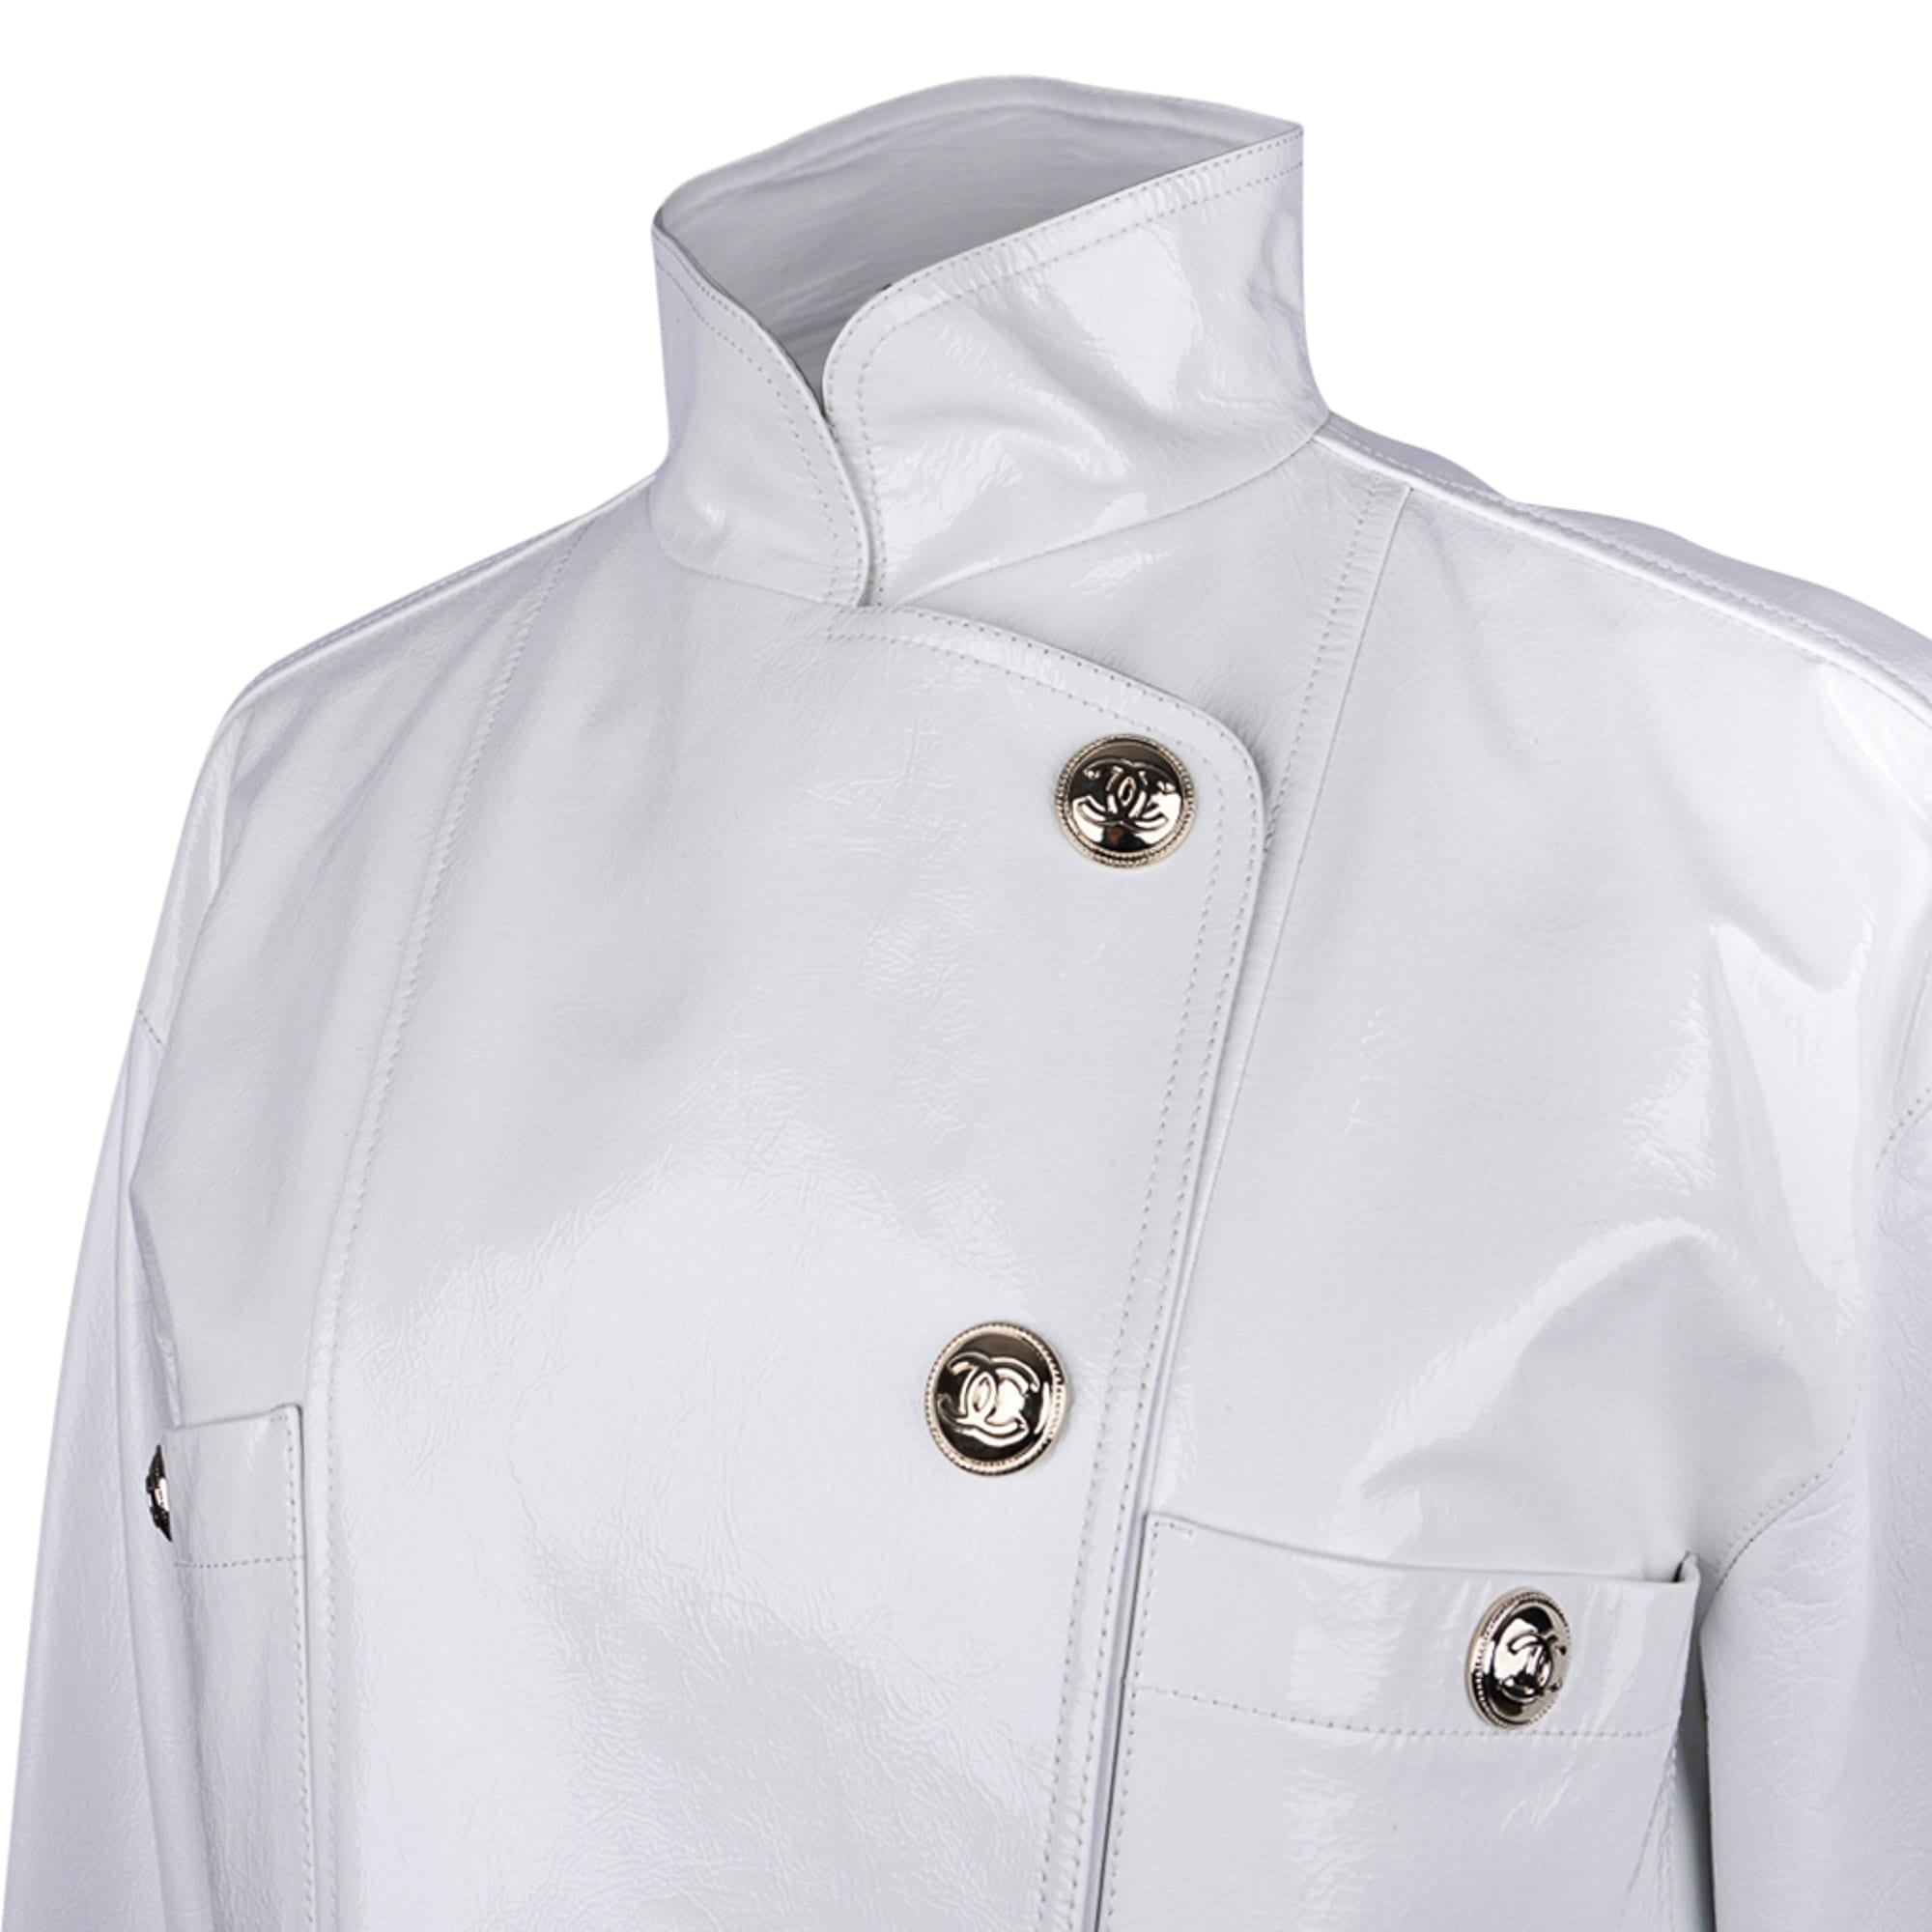 Chanel 2020-21FW Jacket White Patent Leather Short Biker Style 36 / 4